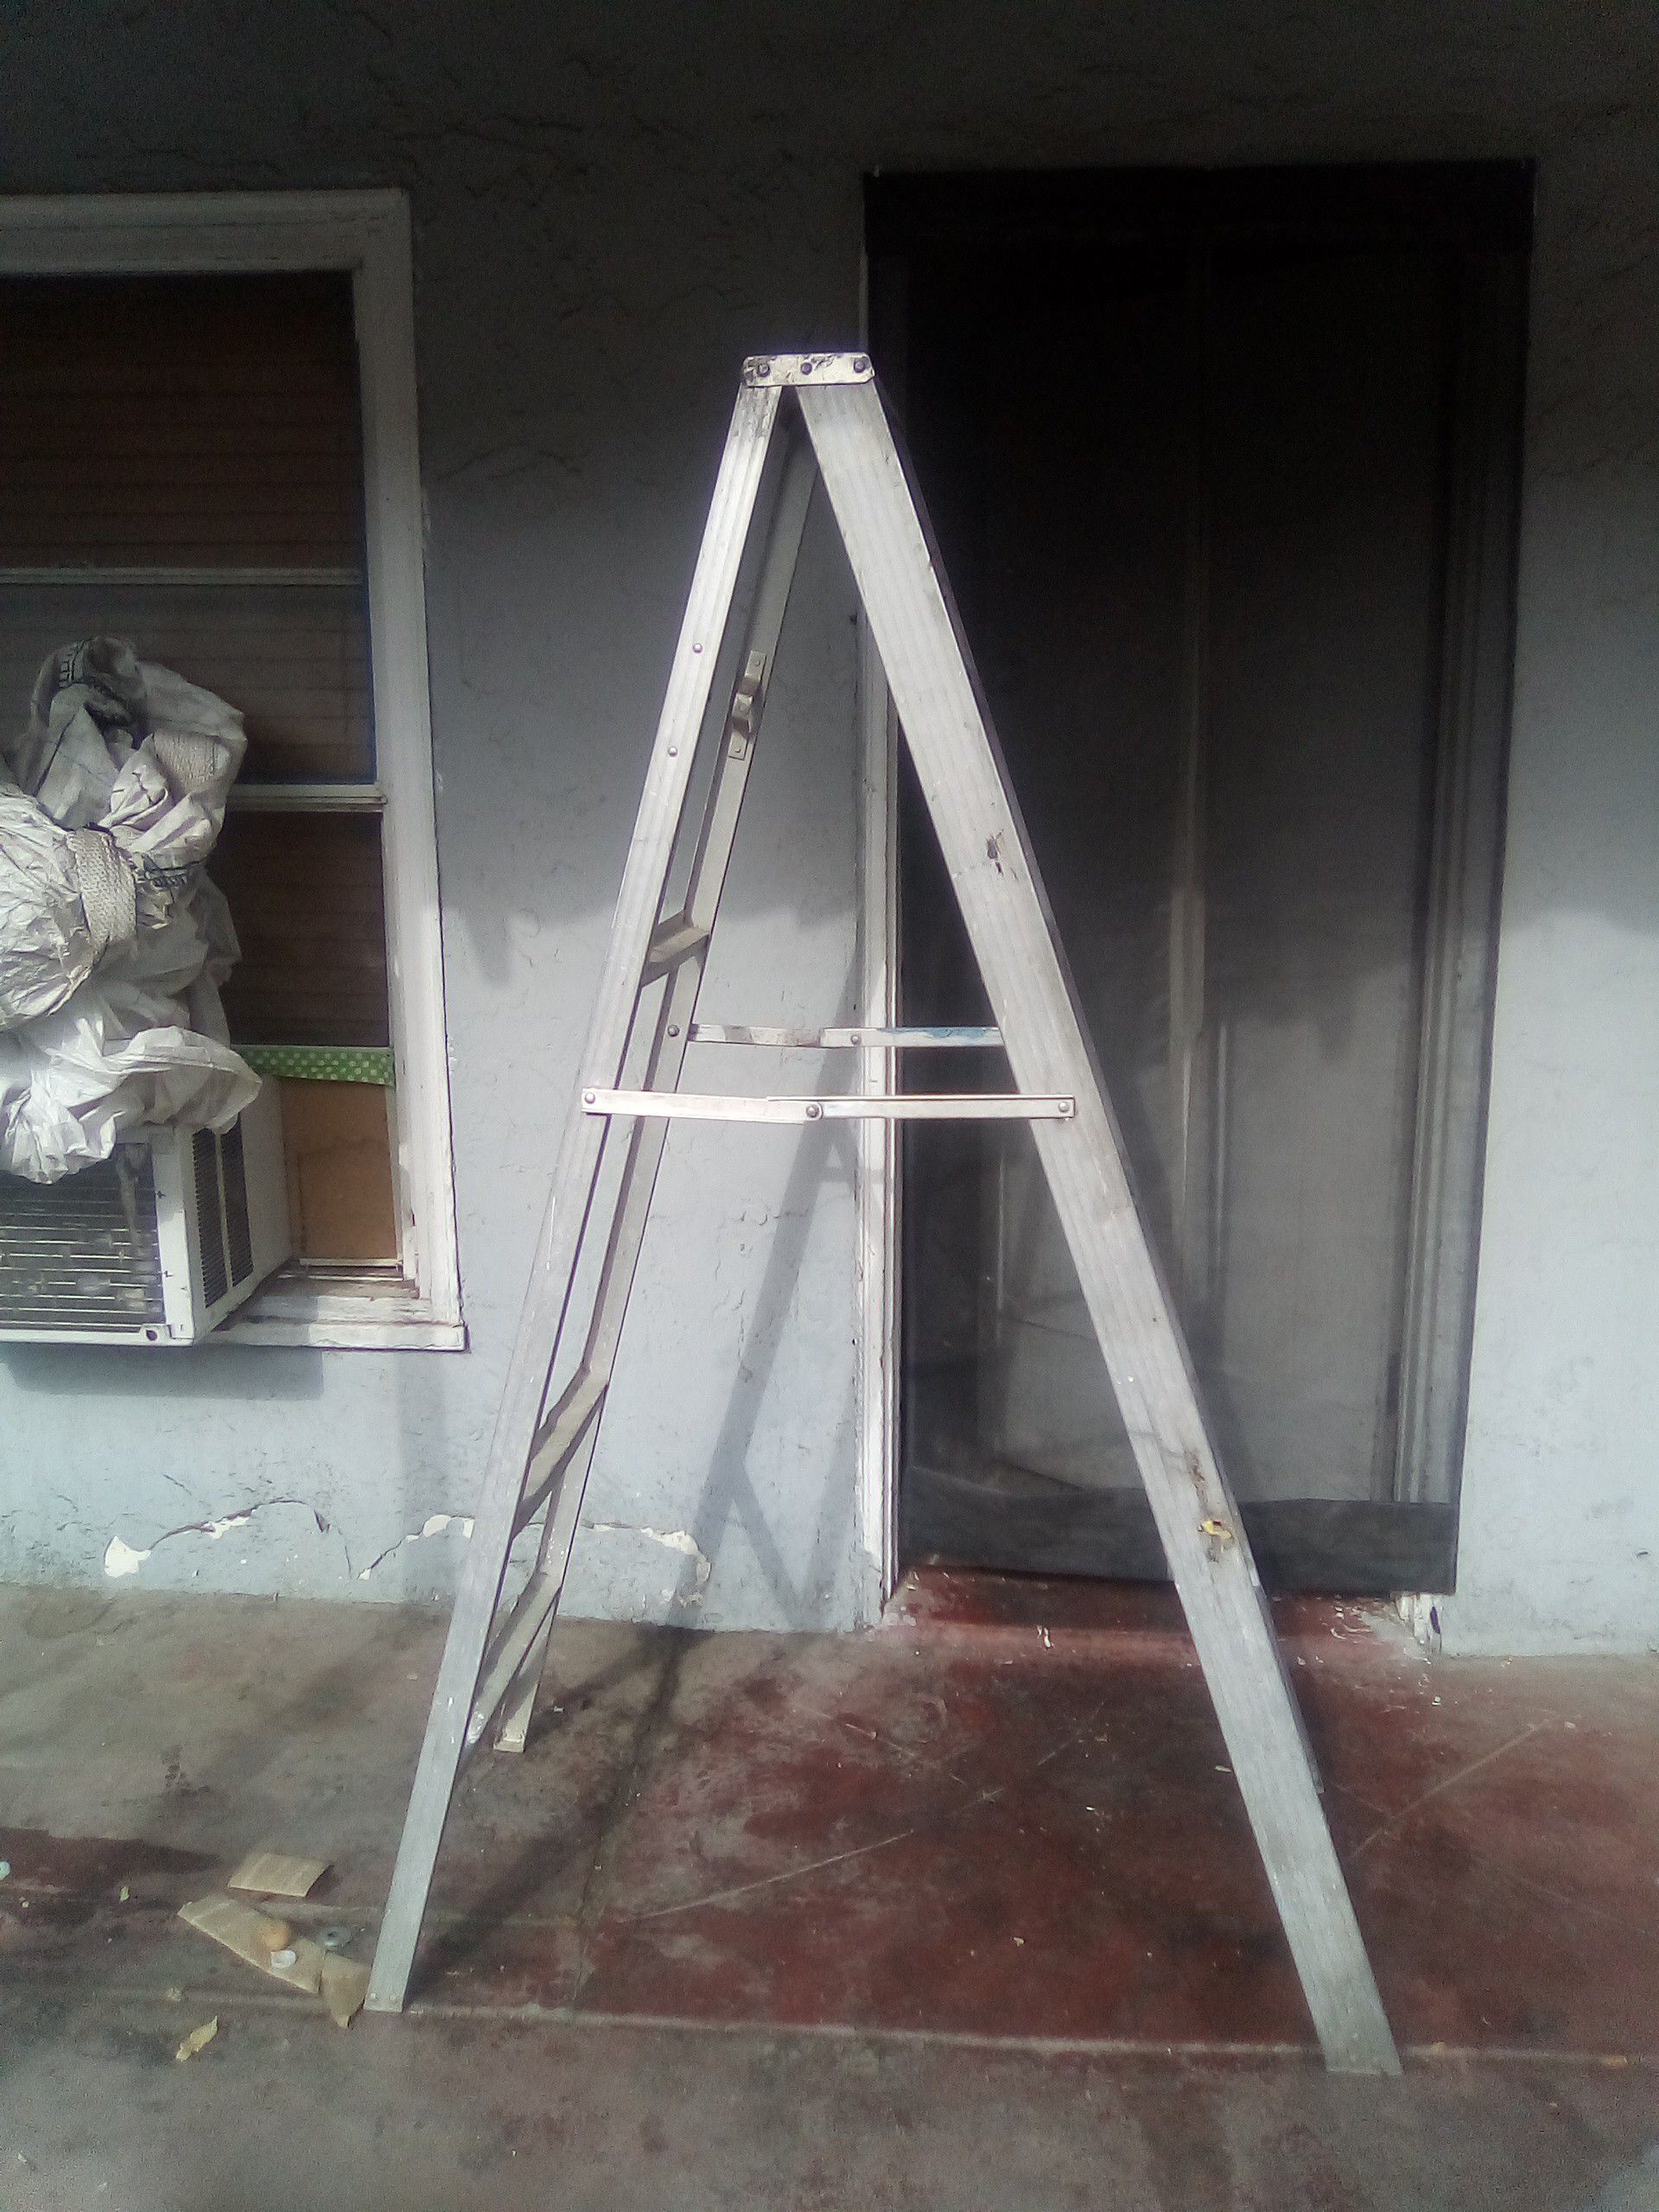 6foot ladder